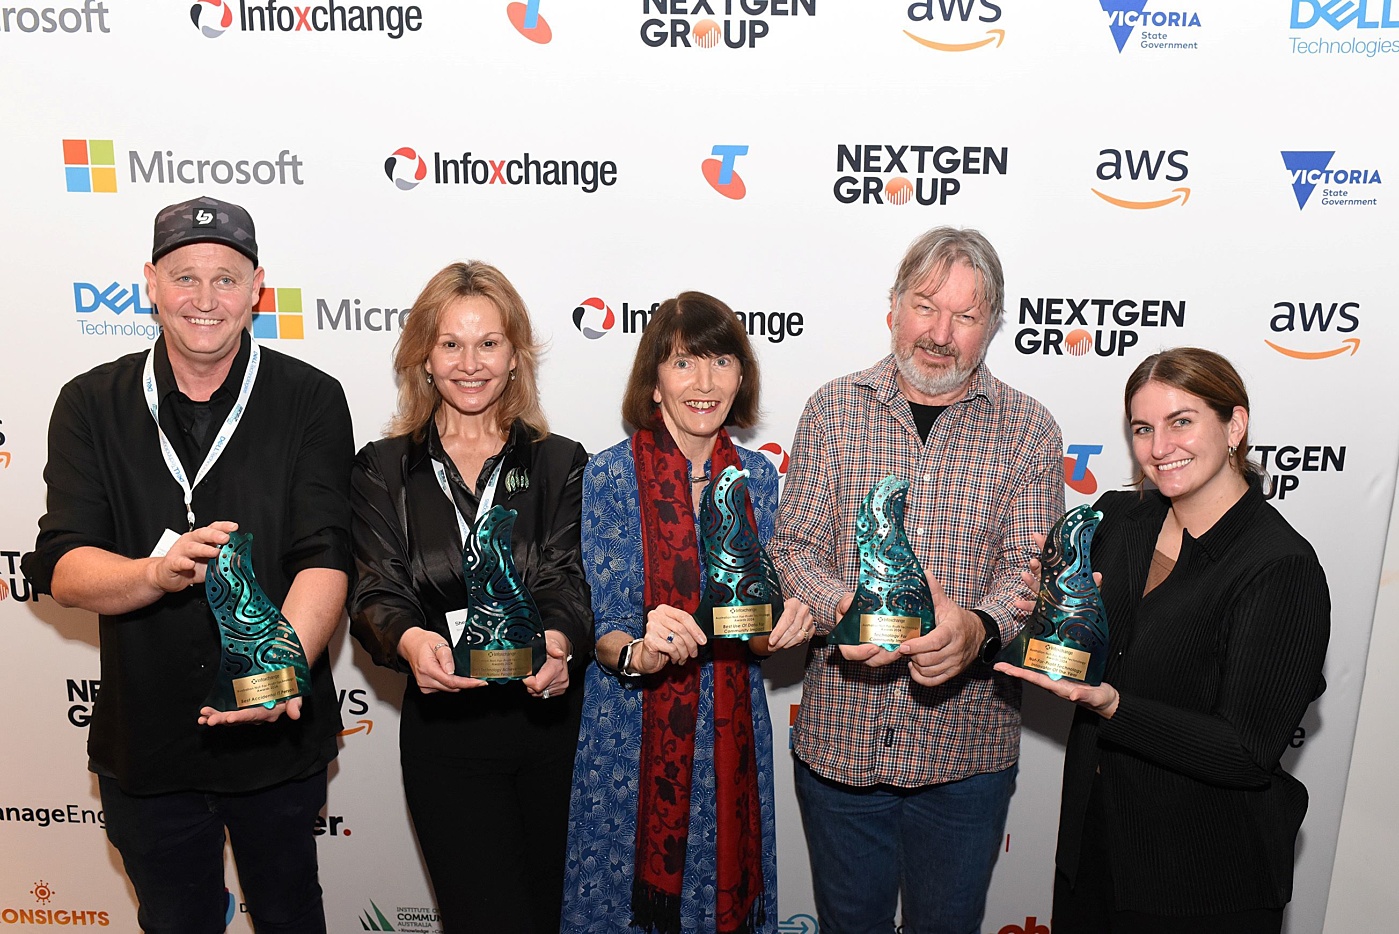 Infoxchange Technology Award winners